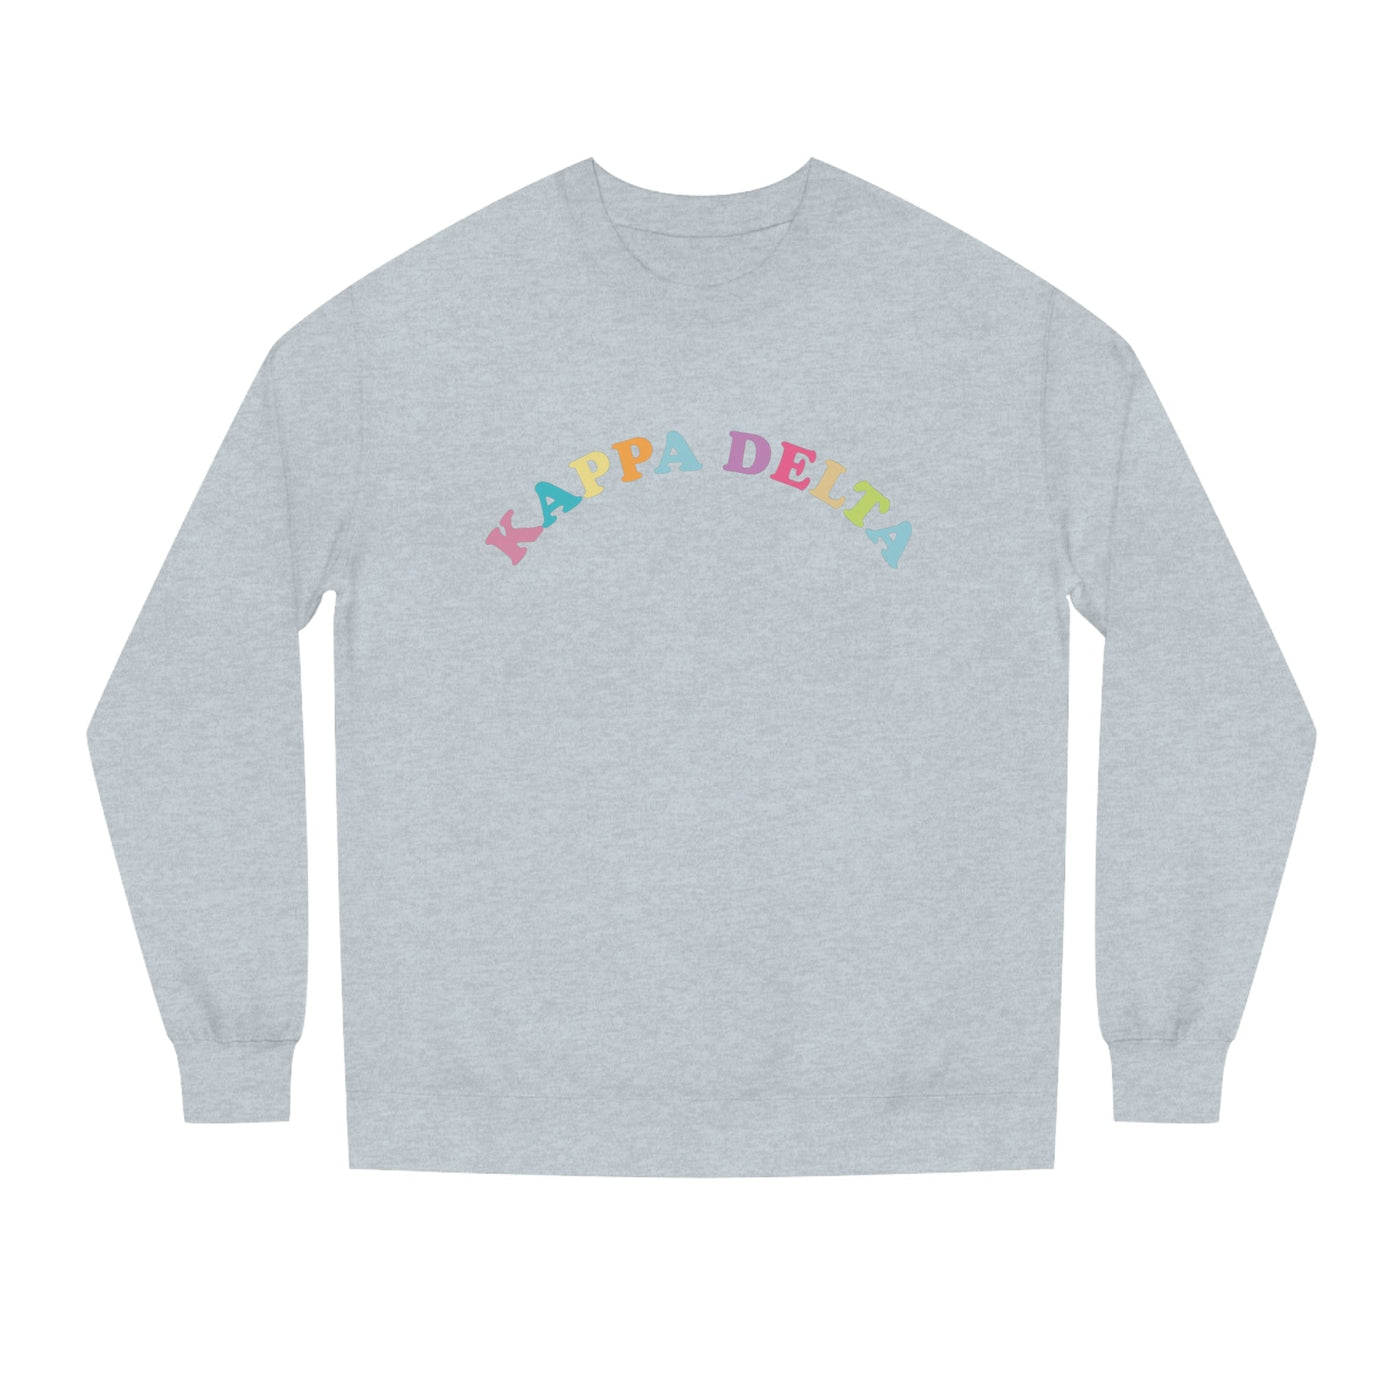 Kappa Delta Colorful Text Cute Kappa Delta Sorority Crewneck Sweatshirt